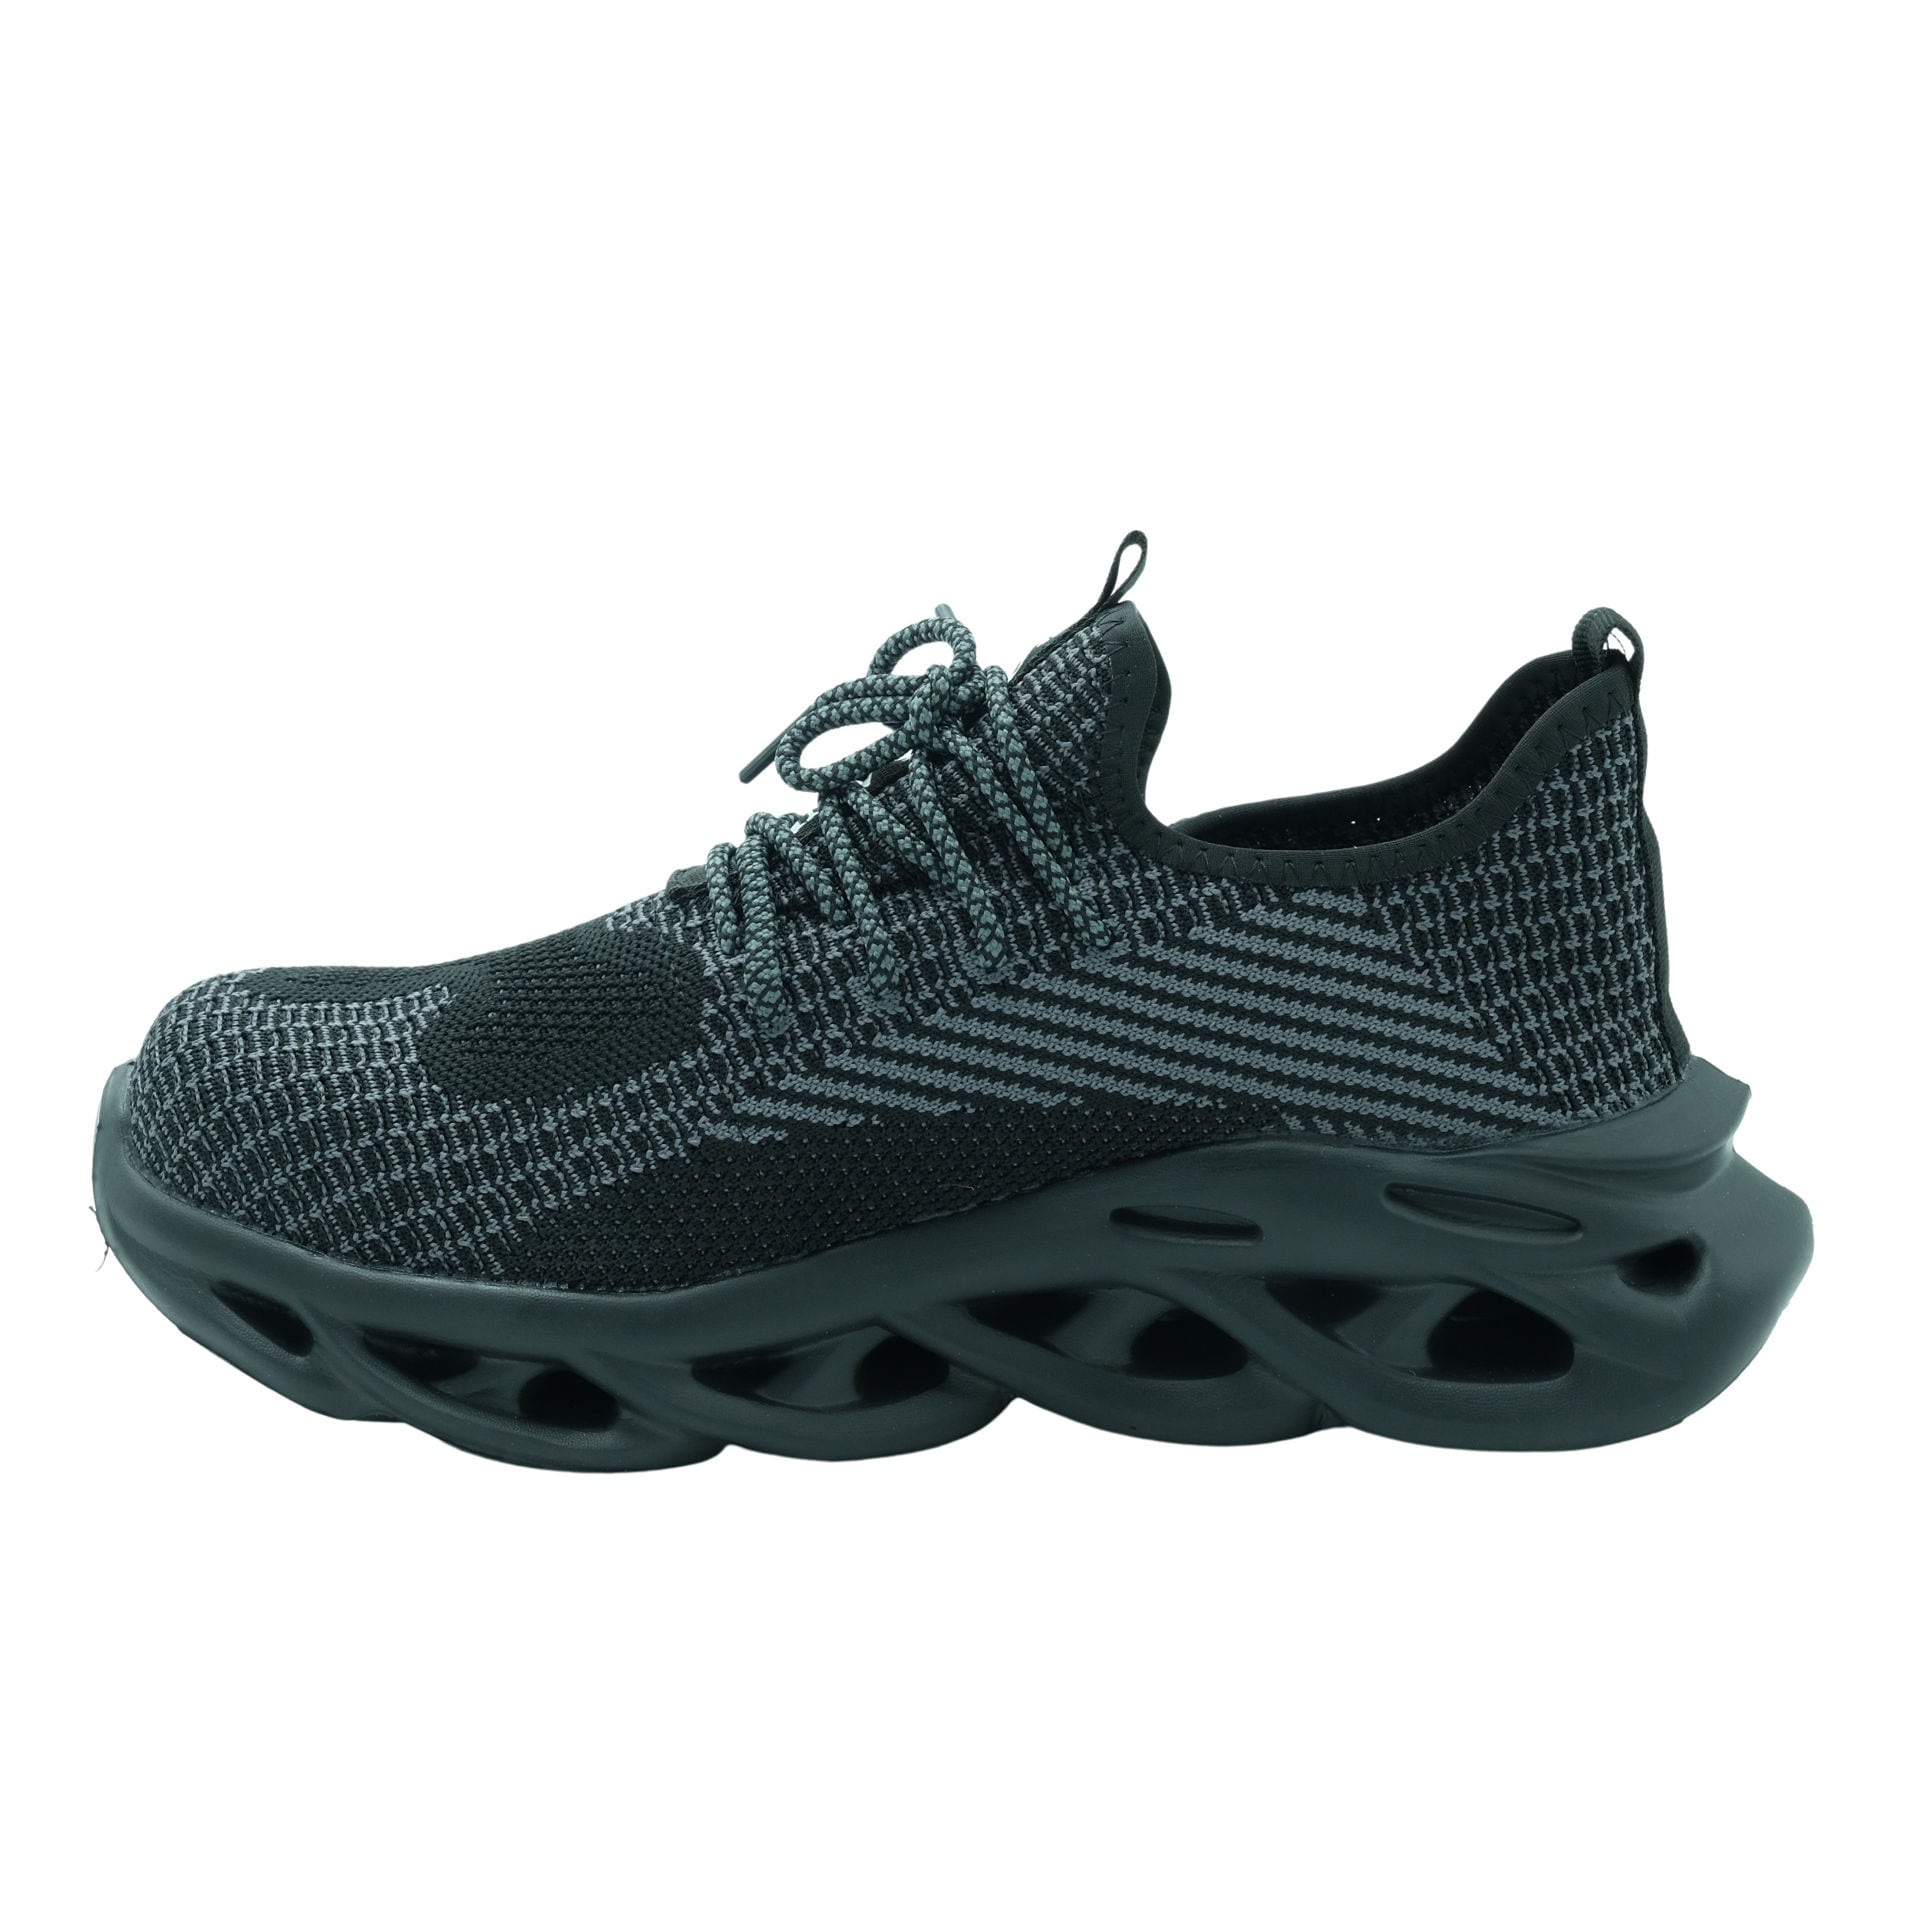 Shop Workland Breathable Mesh Shoe with Steel Toe Cap, Black & Grey ...